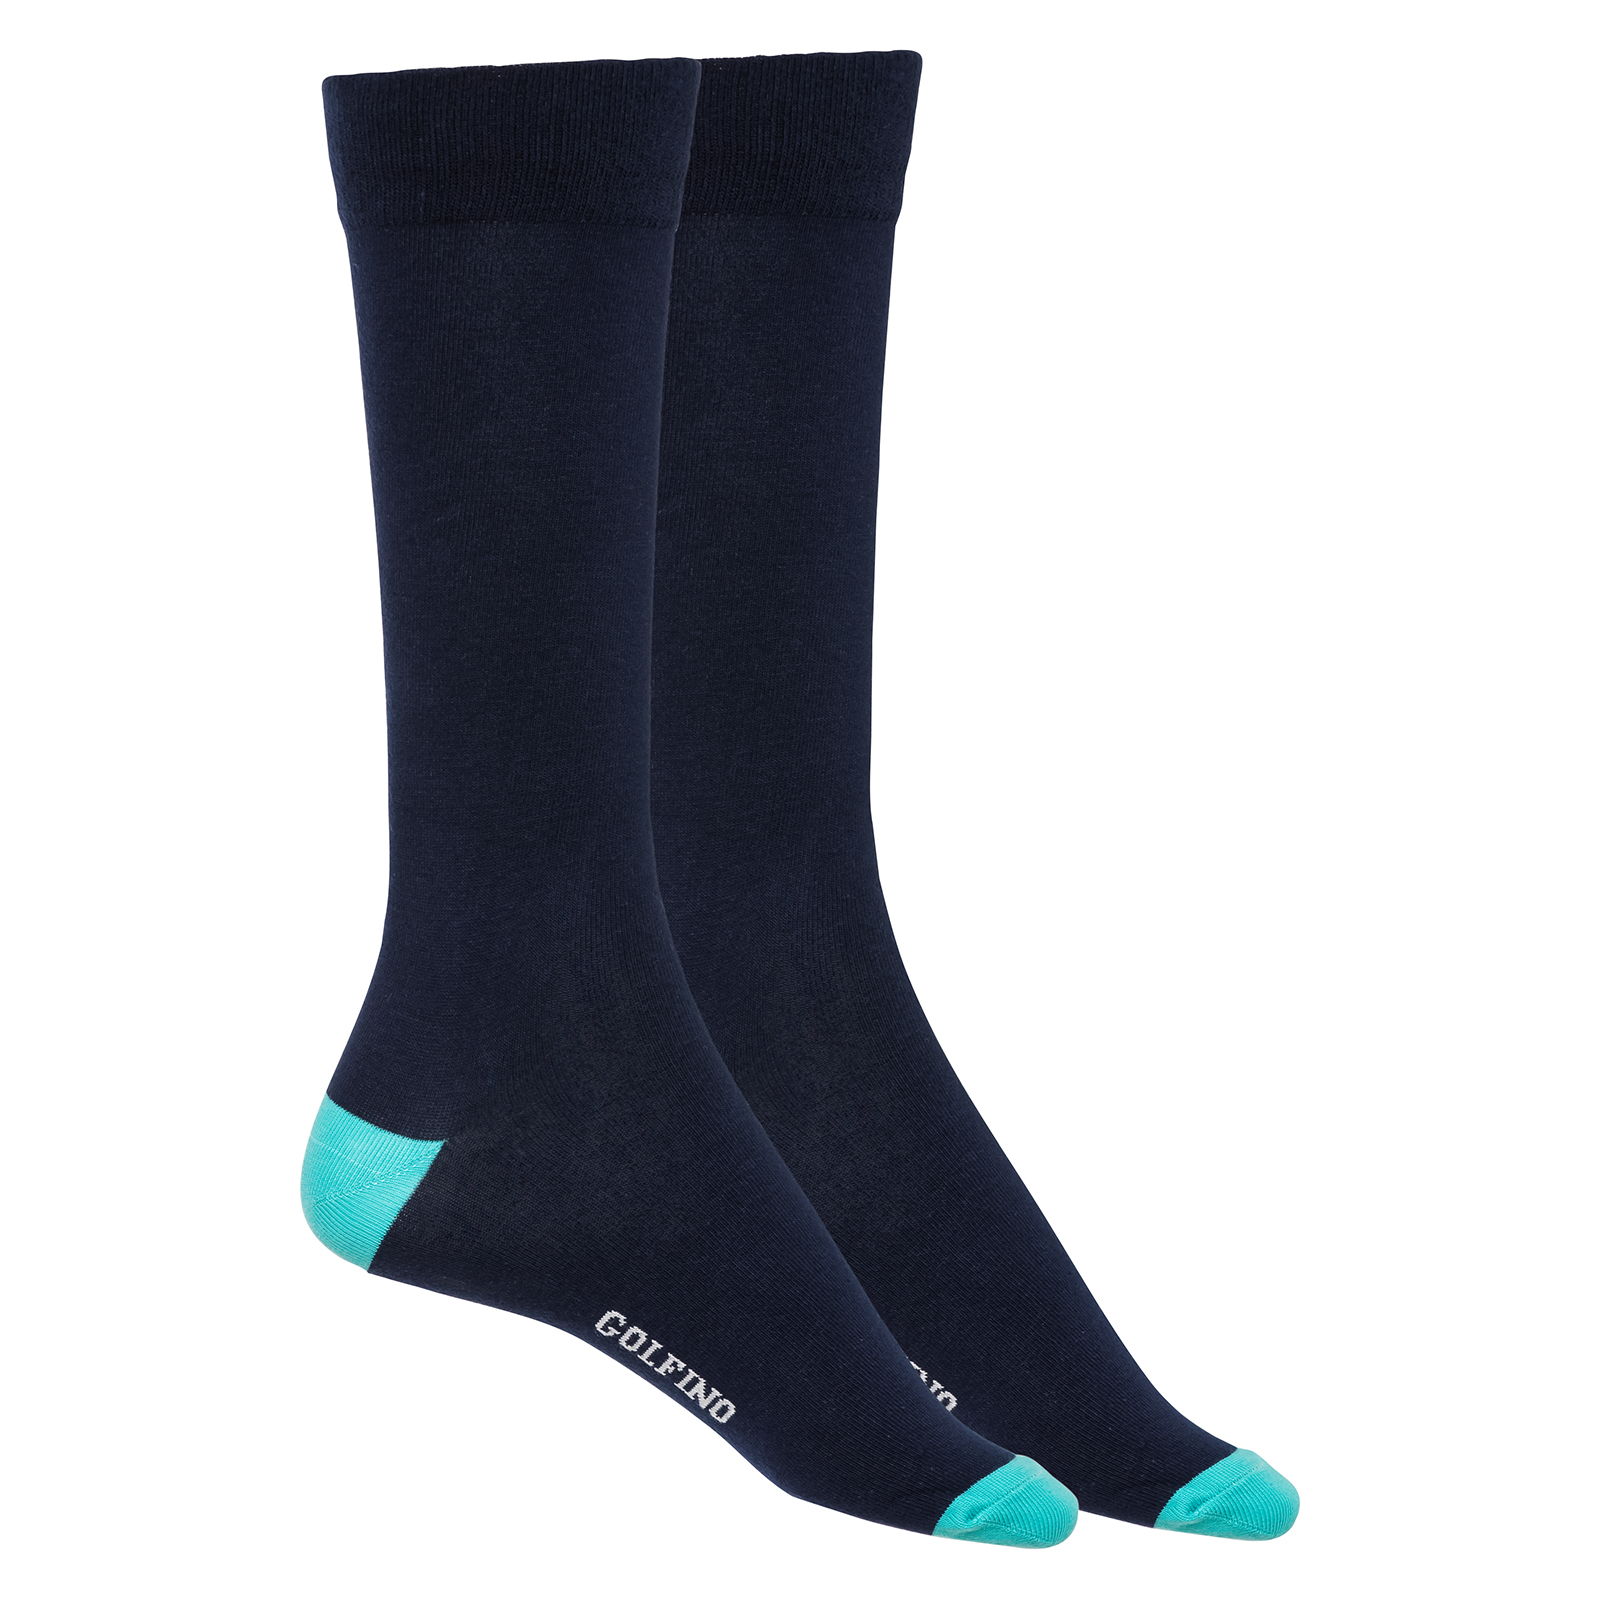 Flexible and comfortable men's golf socks